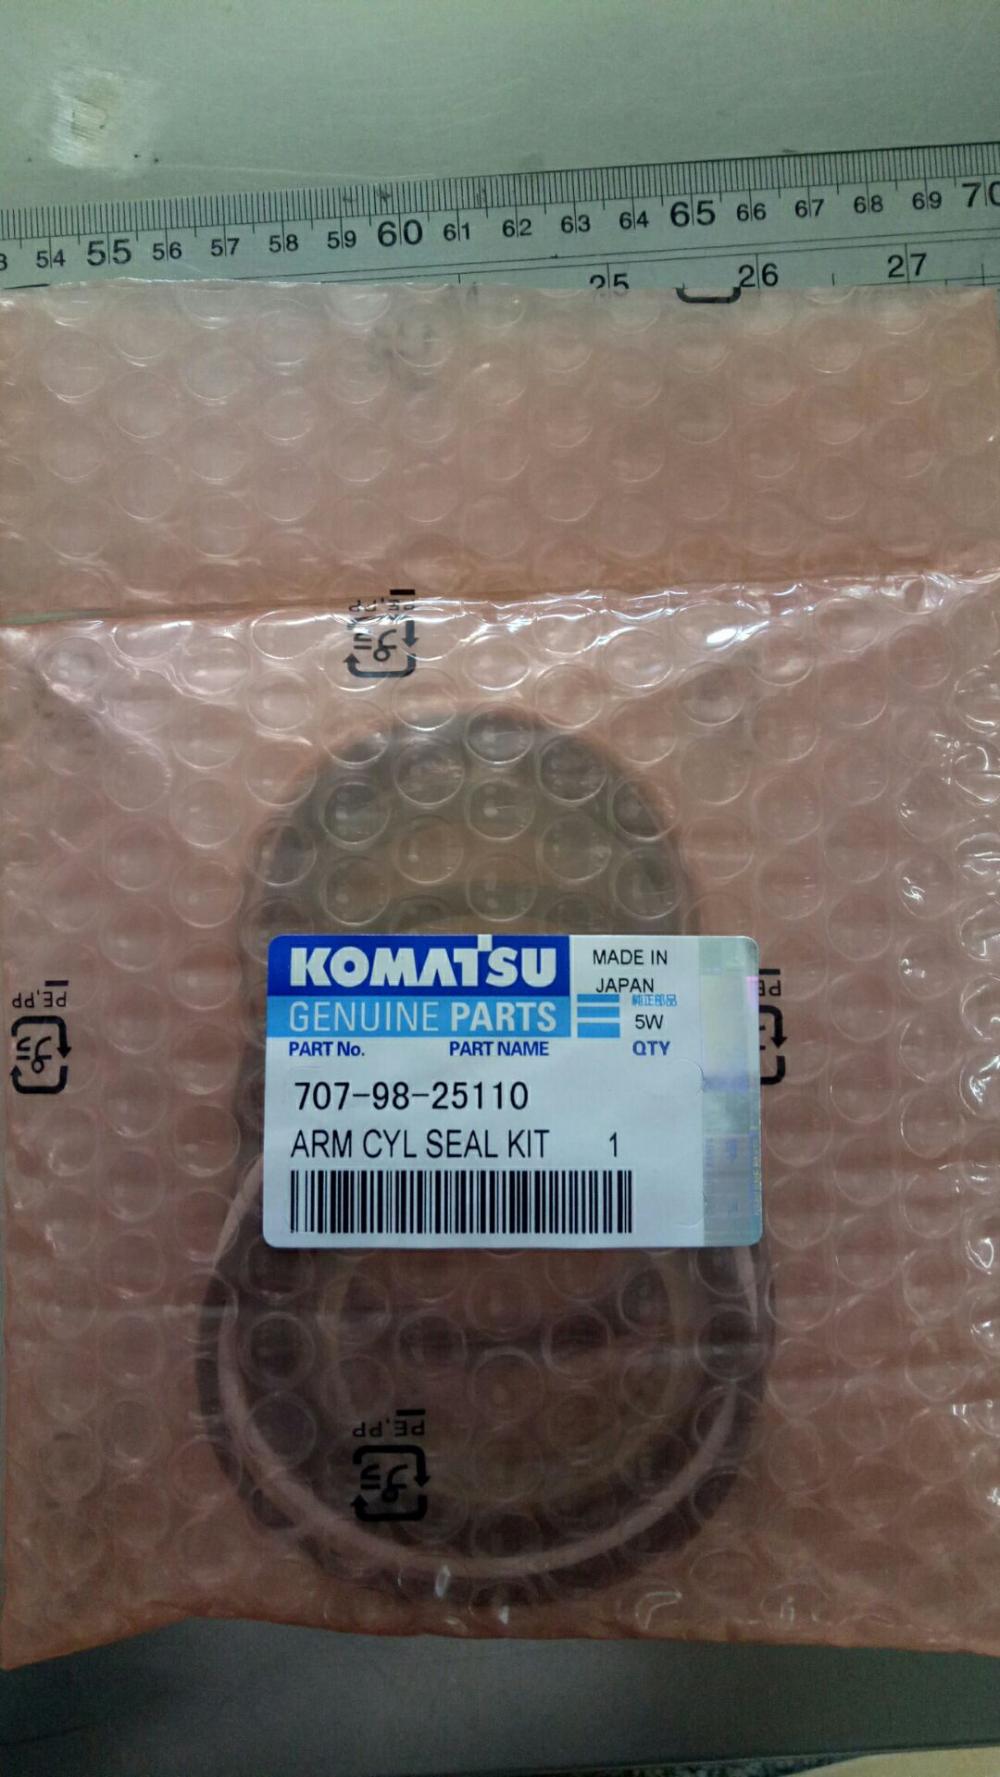 PC50UU-2 Slide 707-98-24820 Stick Arm Cylinder Seal Kit Fits Komatsu PC30-7 